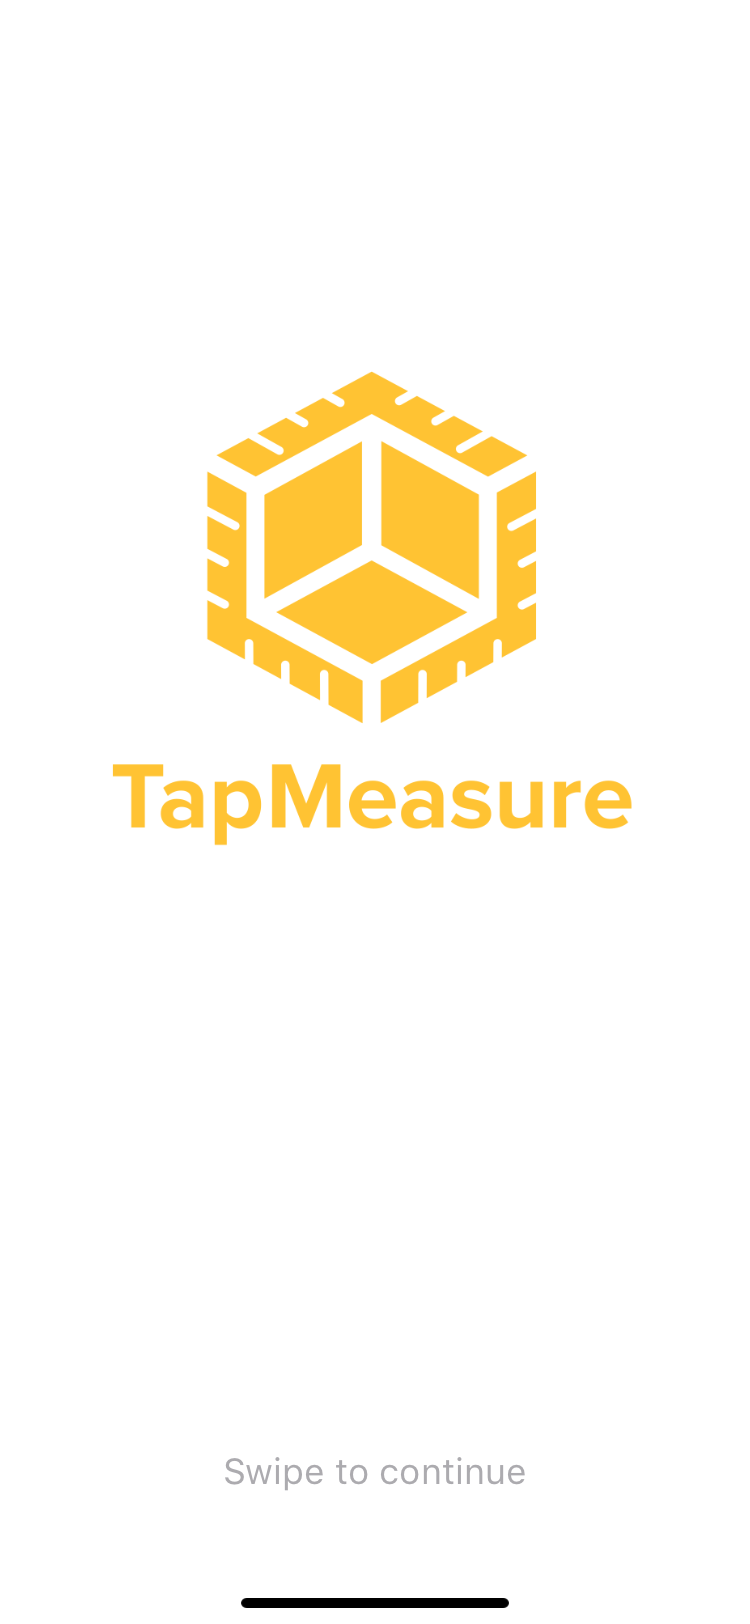 TapMeasure startup page.